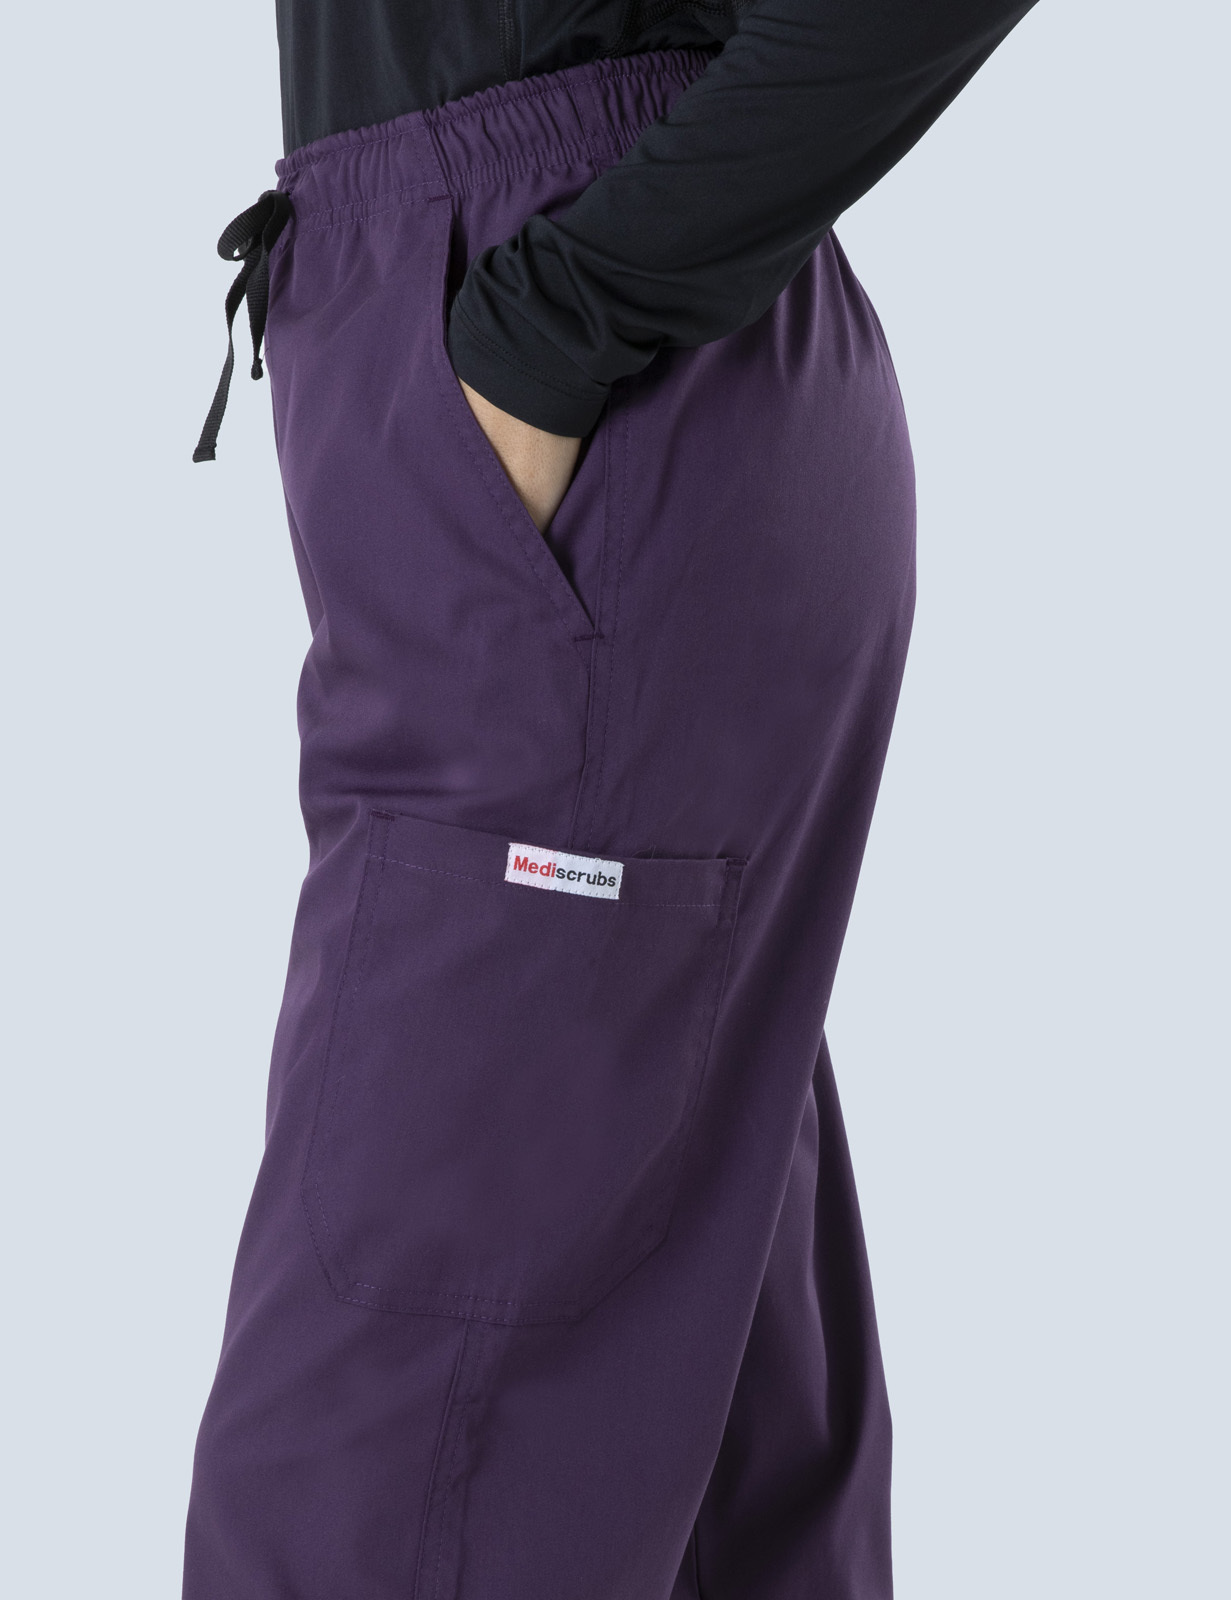 Women's Cargo Performance Pants - Aubergine - 2X Large